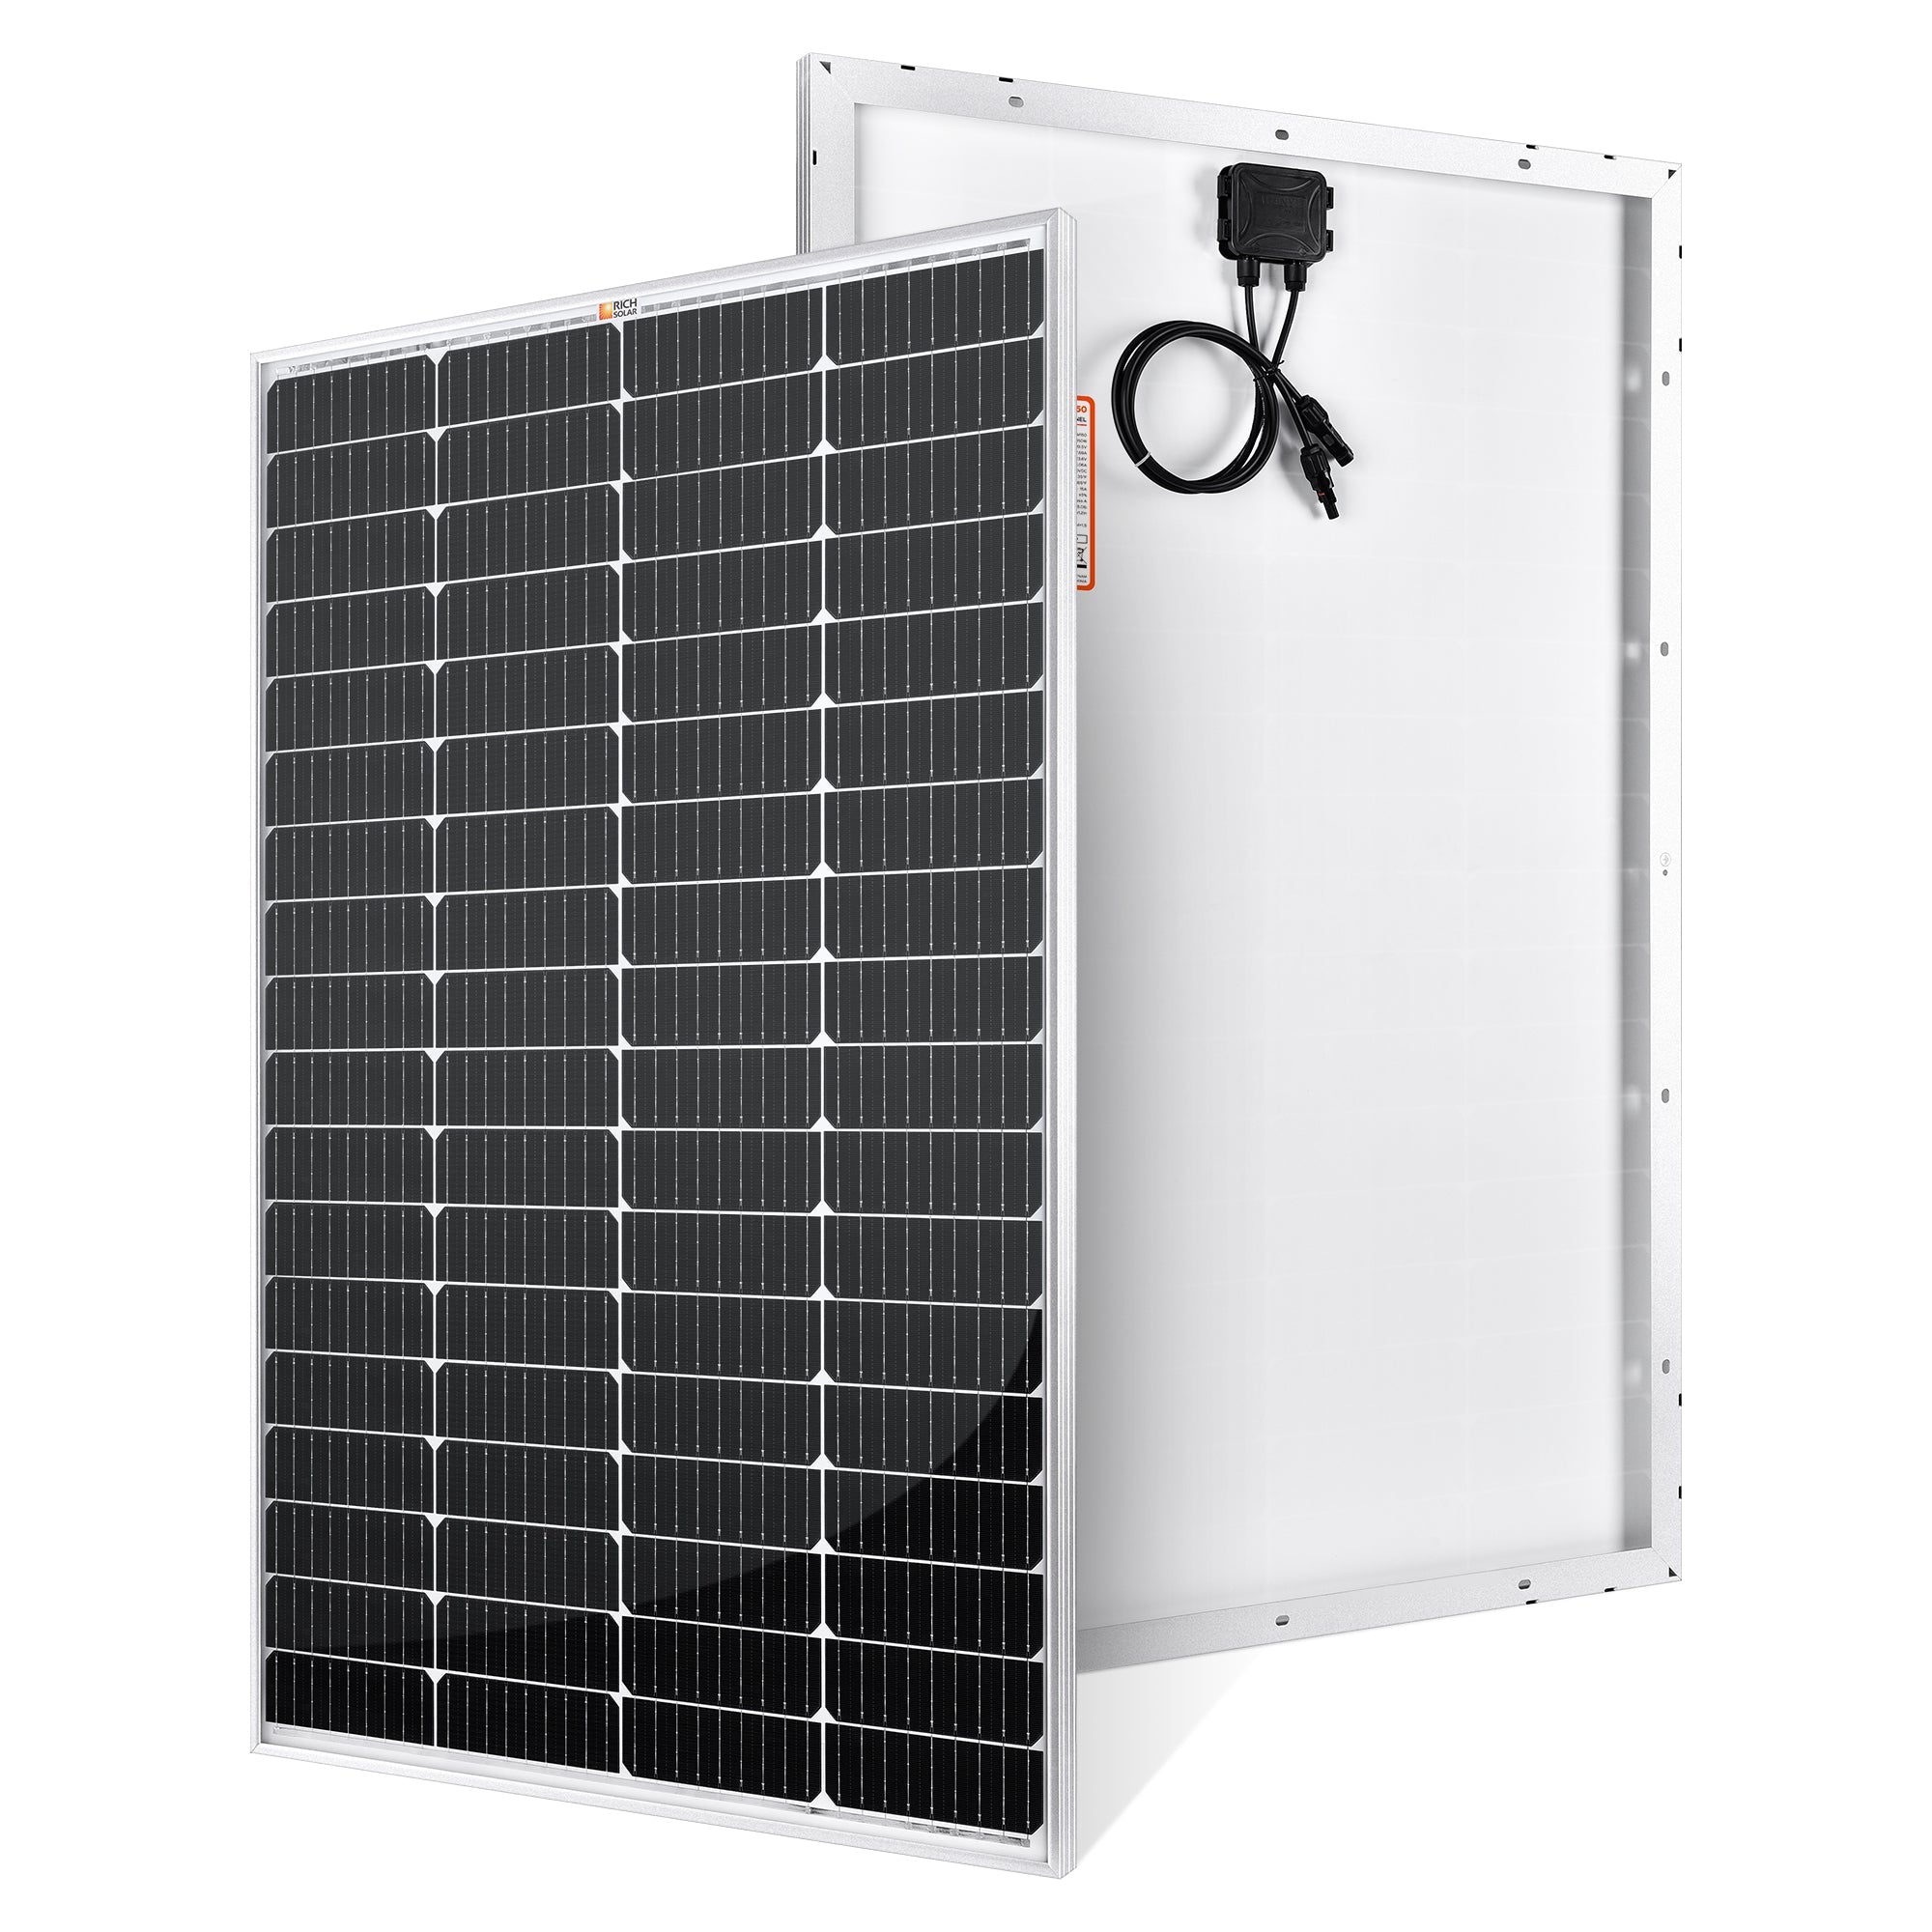 RICH SOLAR MEGA 150 Watt Monocrystalline Solar Panel | Best 12V Panel for RVs and Off-Grid - Solar Generators and Power Stations Plus